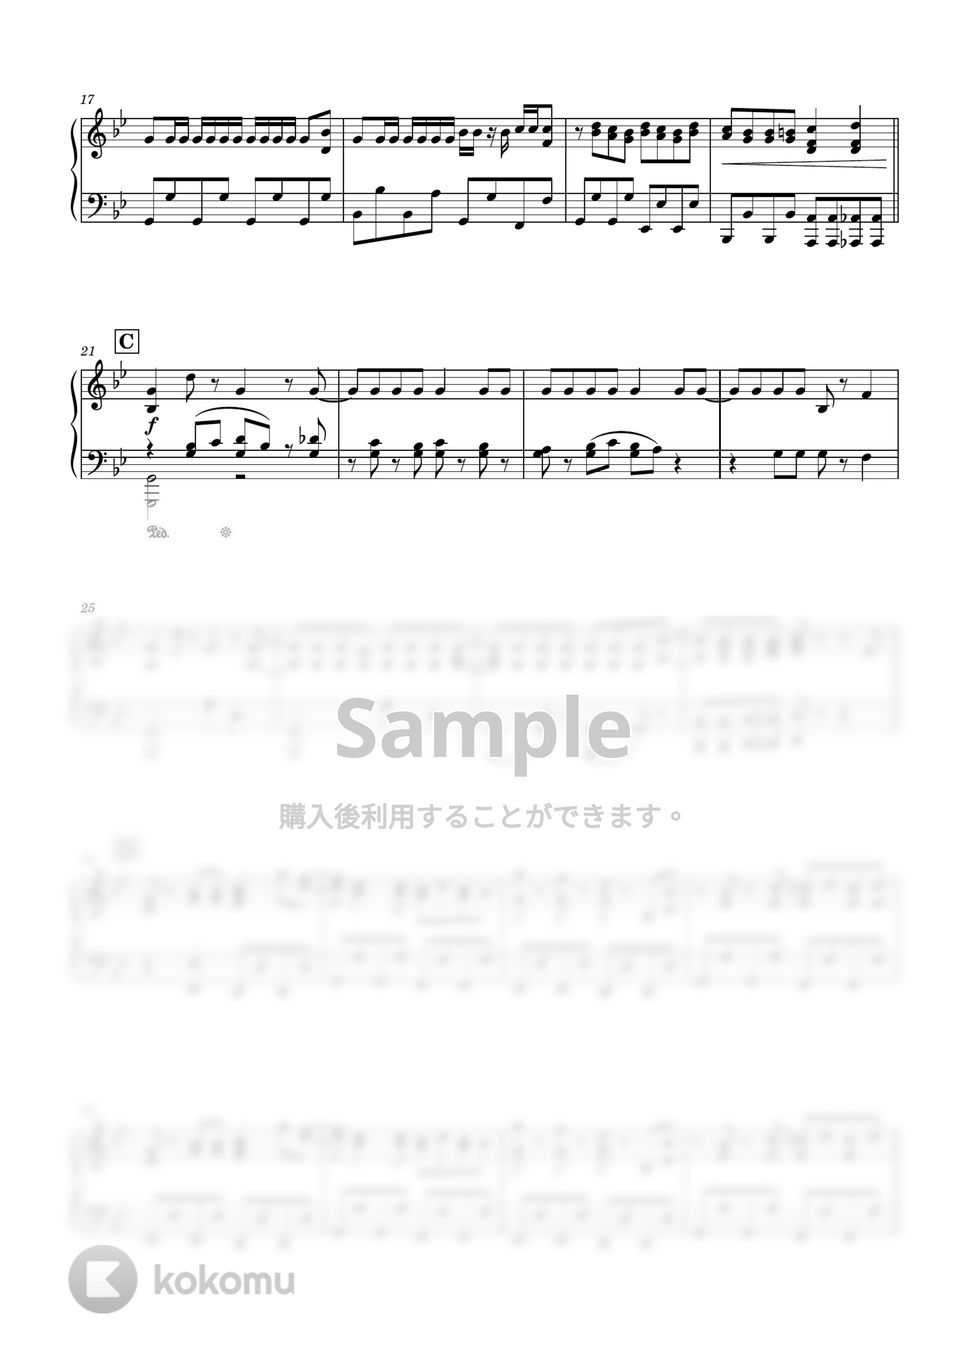 DECO*27 - シンデレラ (ピアノソロ上級) by Niisan